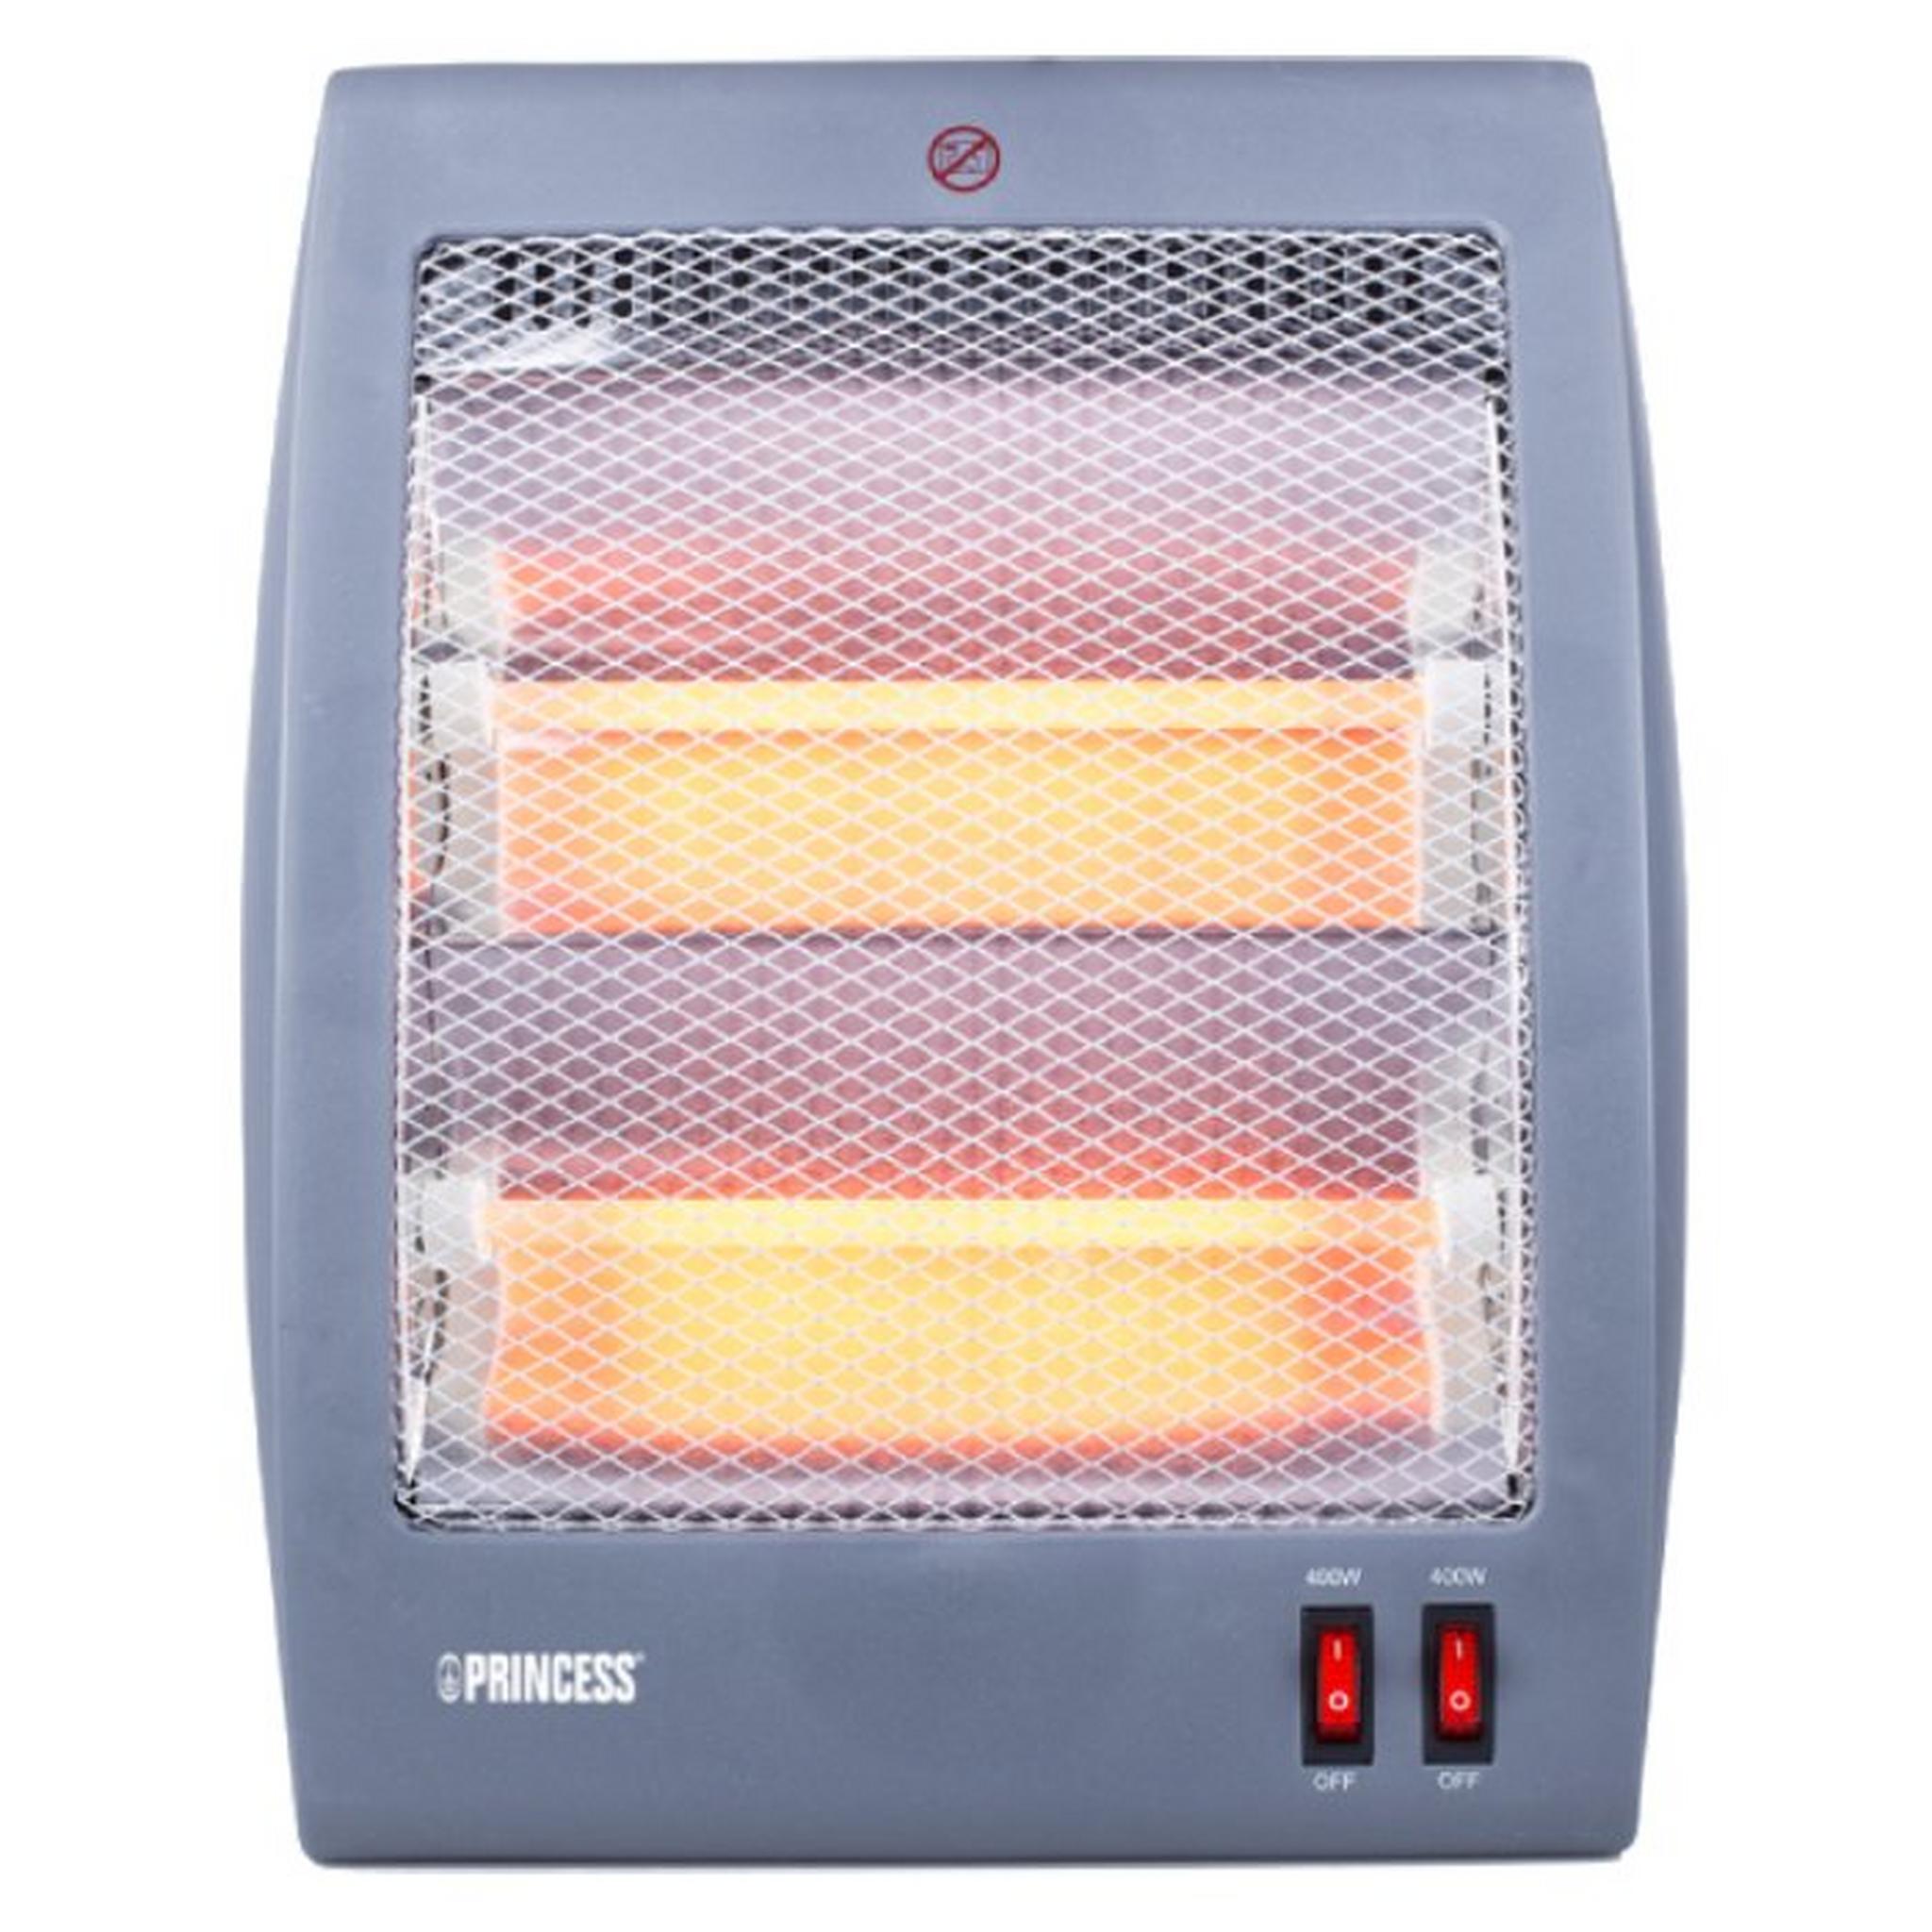 Princess Halogen Electric Heater, 800W, 2 Heat Settings, 345011 - Grey